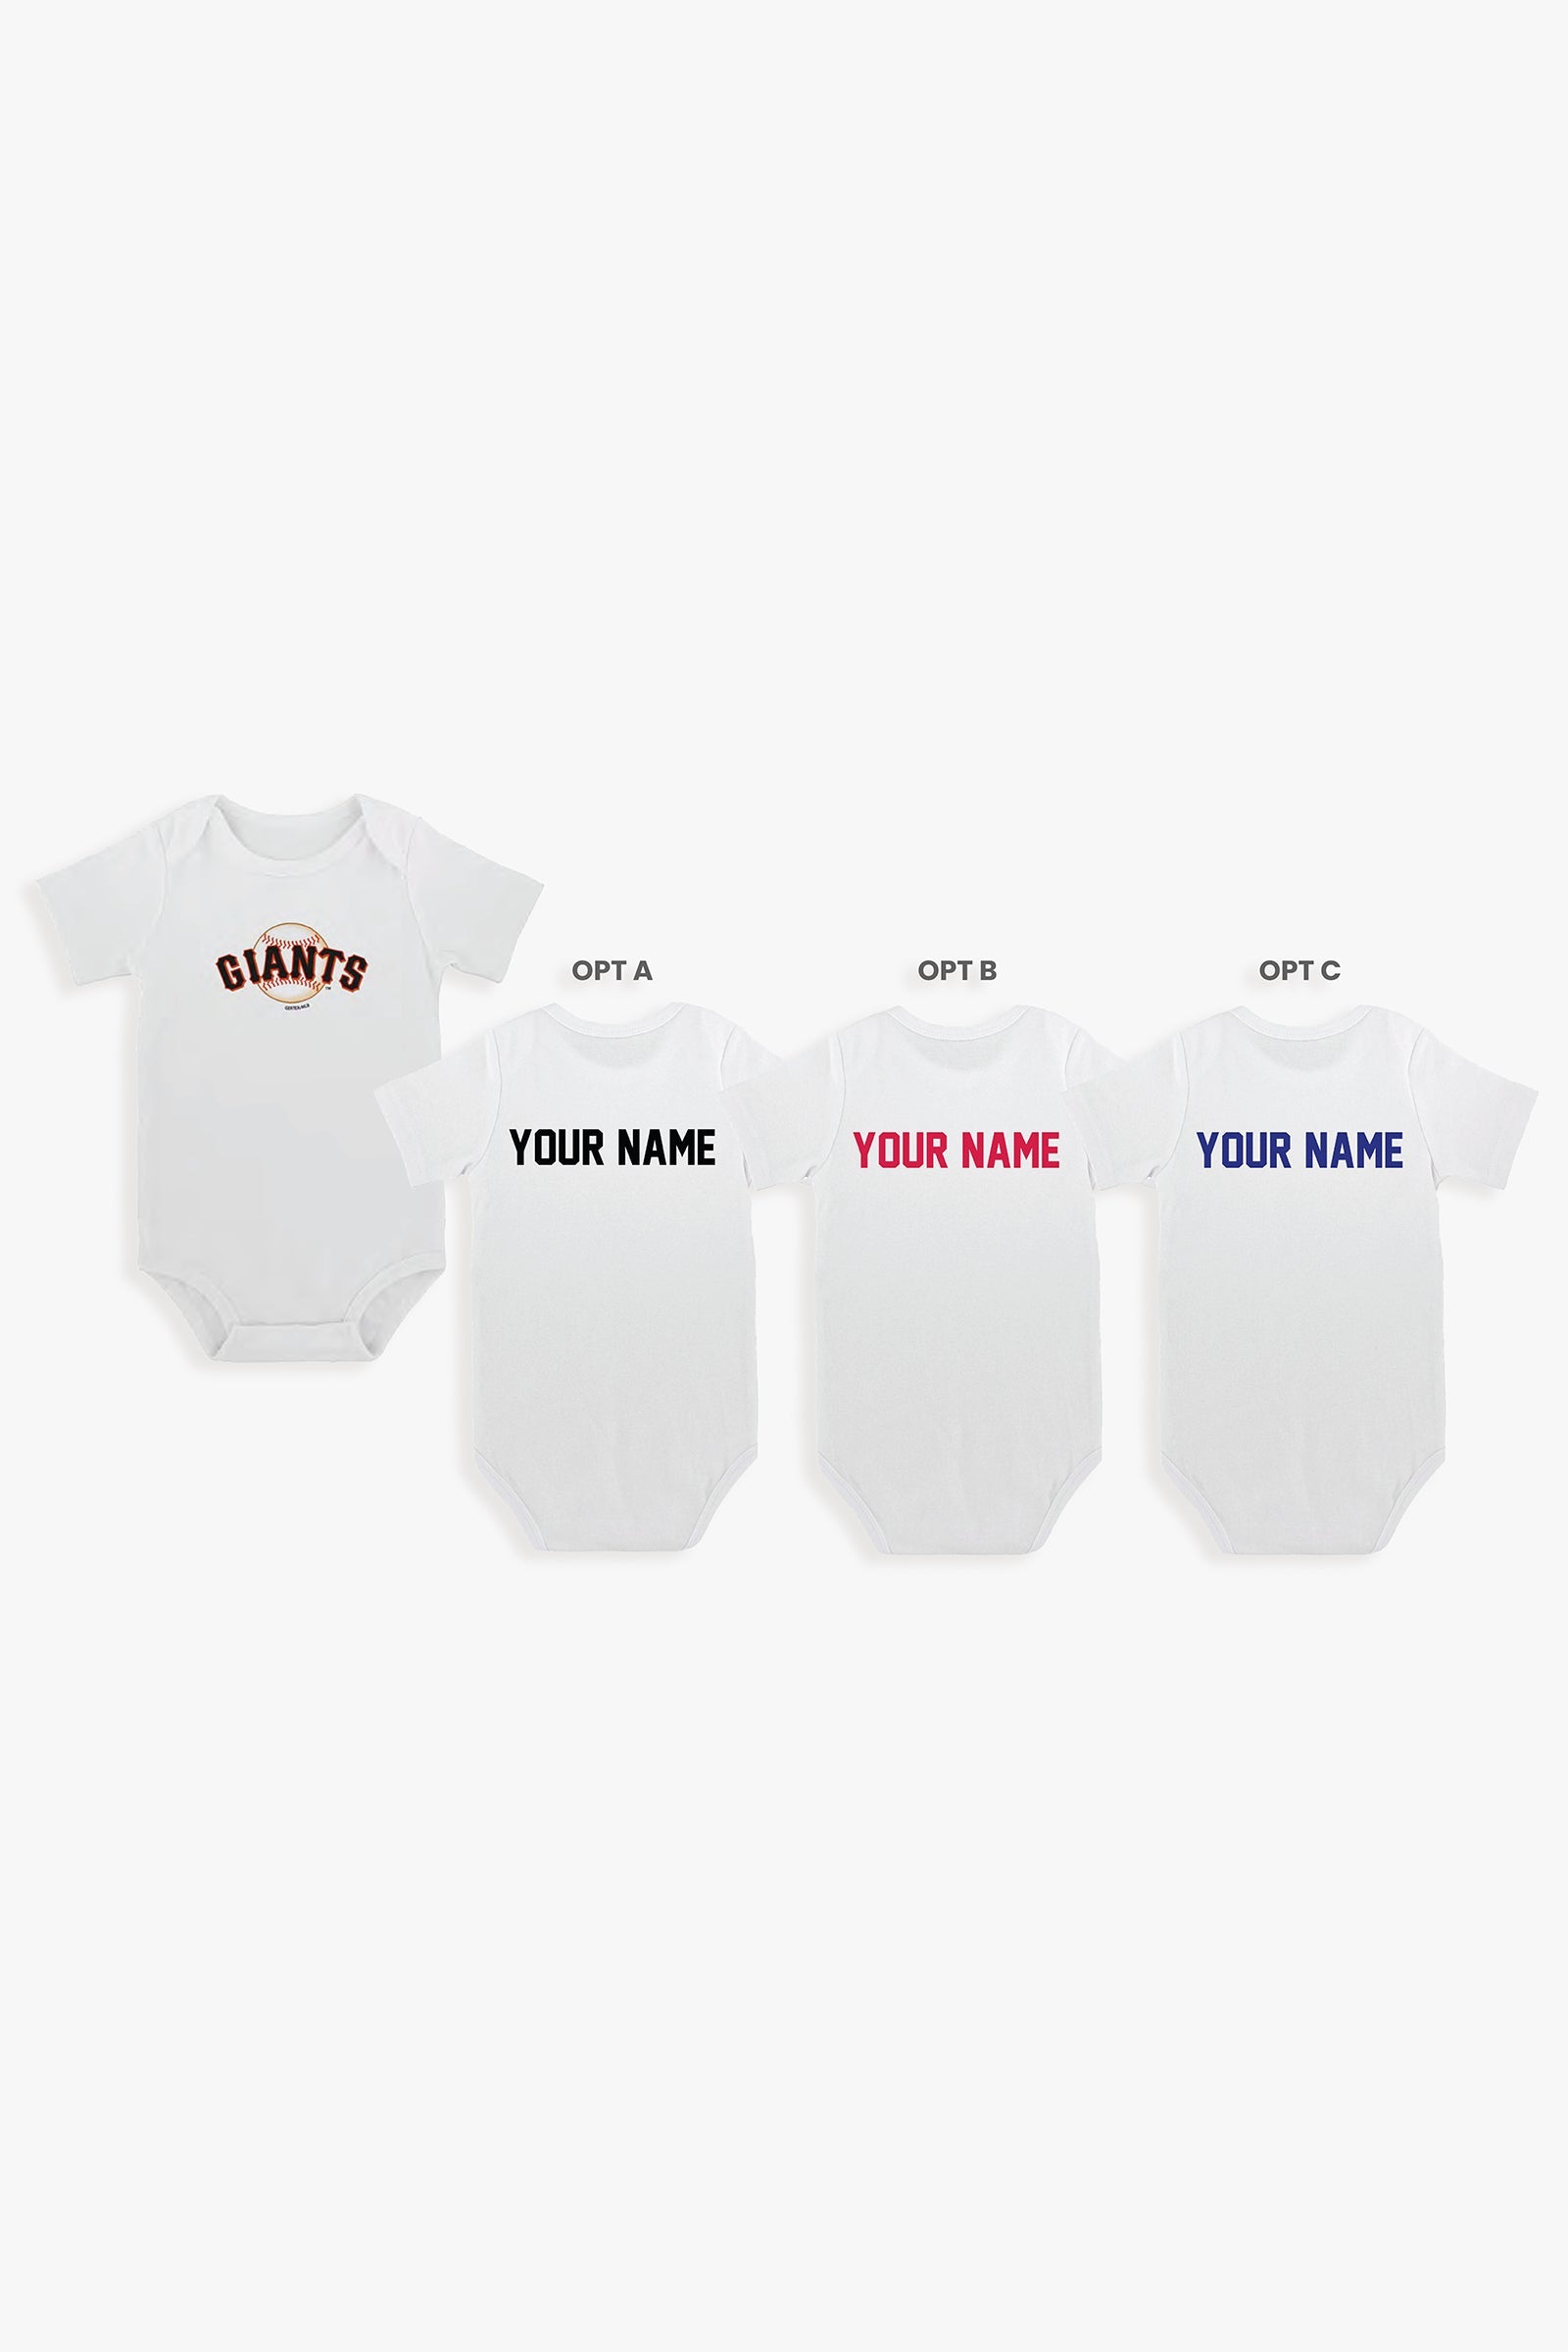 Gertex Customizable MLB Baby Bodysuit in White (18-24 Months)